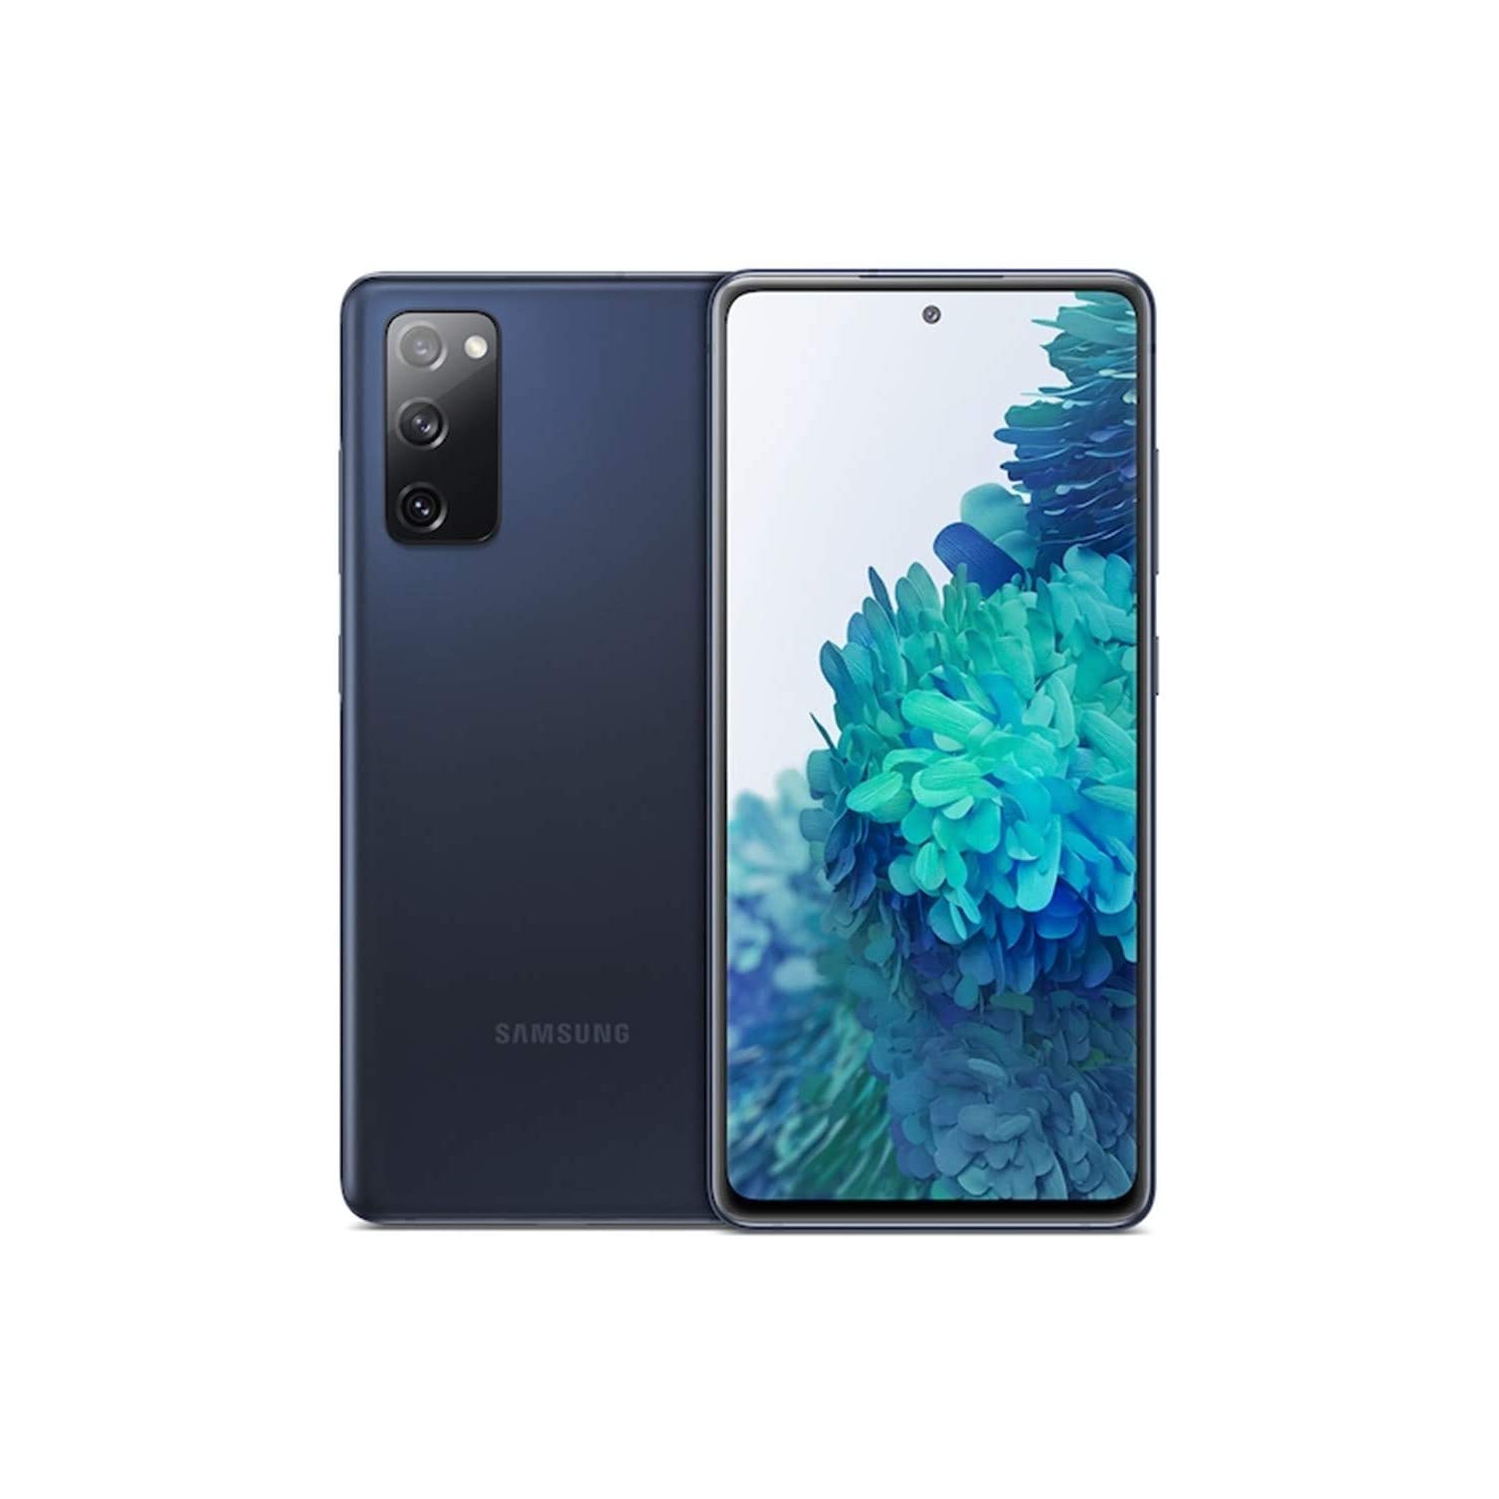 Samsung Galaxy S20 FE | 5G -128GB - Smartphone - Cloud Navy – Unlocked - New